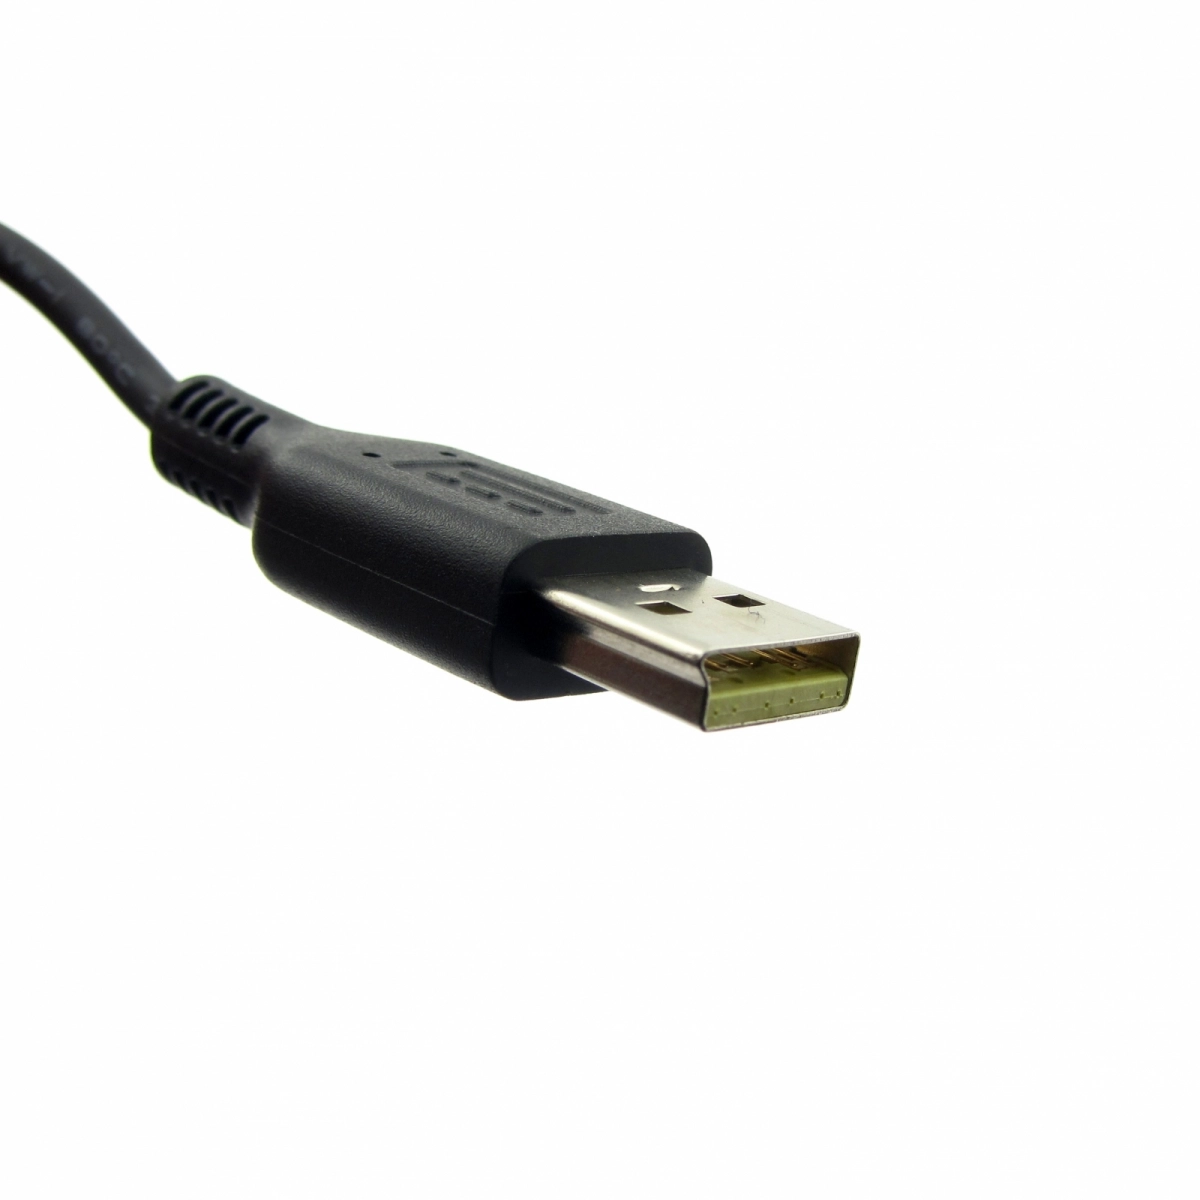 MTXtec Netzteil für LENOVO 36200579, 20/5.2V, 2A, Stecker USB